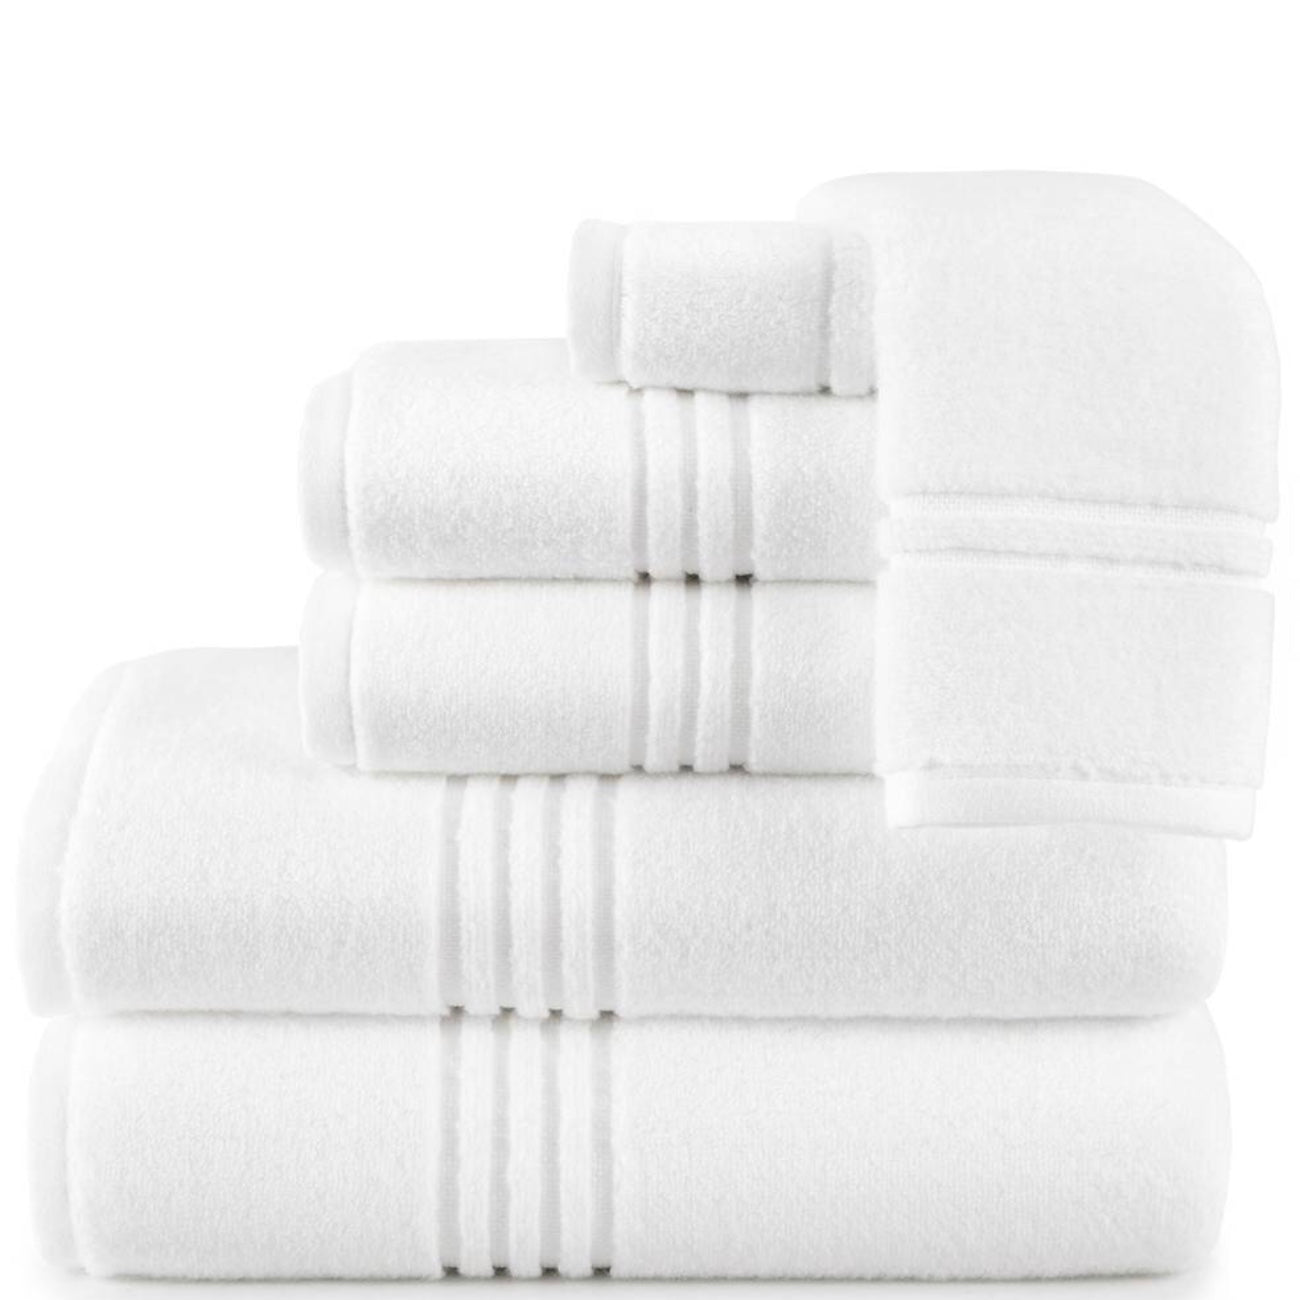 Liz Claiborne Signature Plush Logo Bath Towel